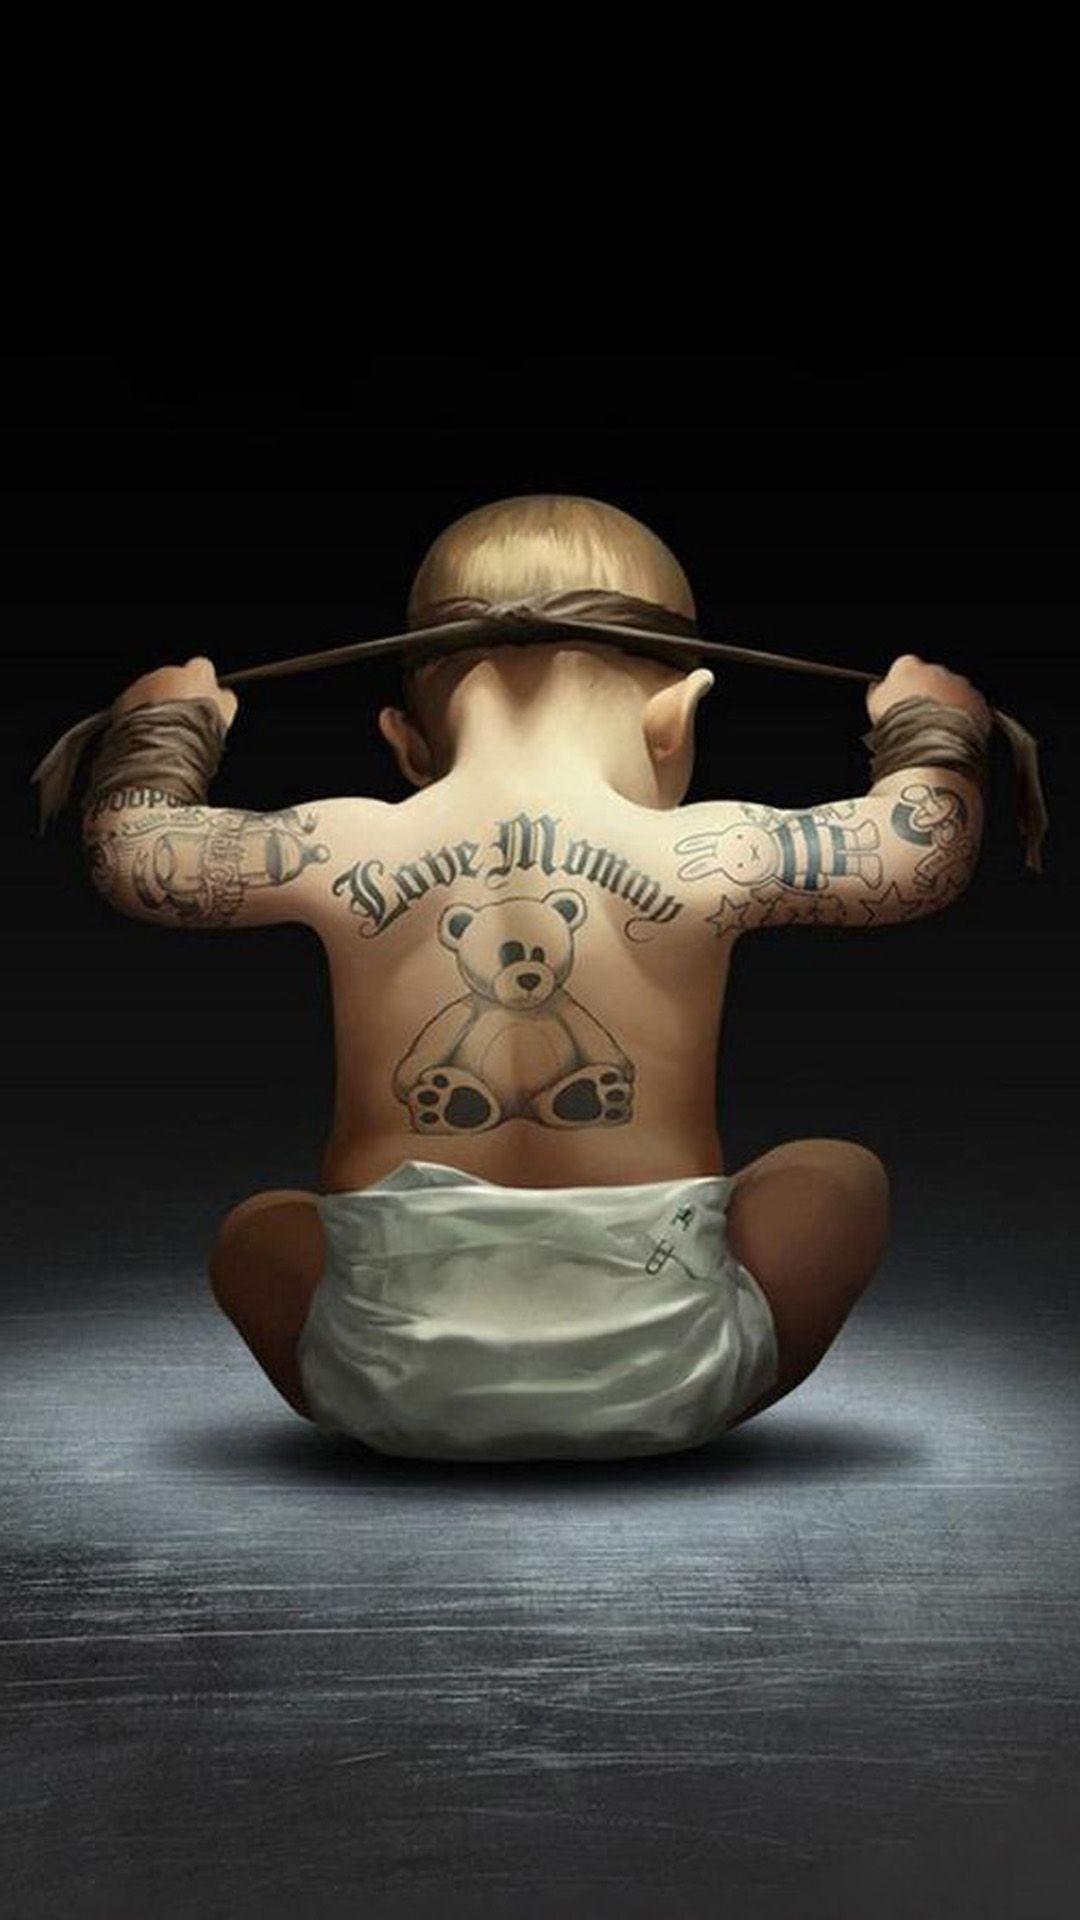 Person with sleeve tattoo photo  Free Tattoo Image on Unsplash